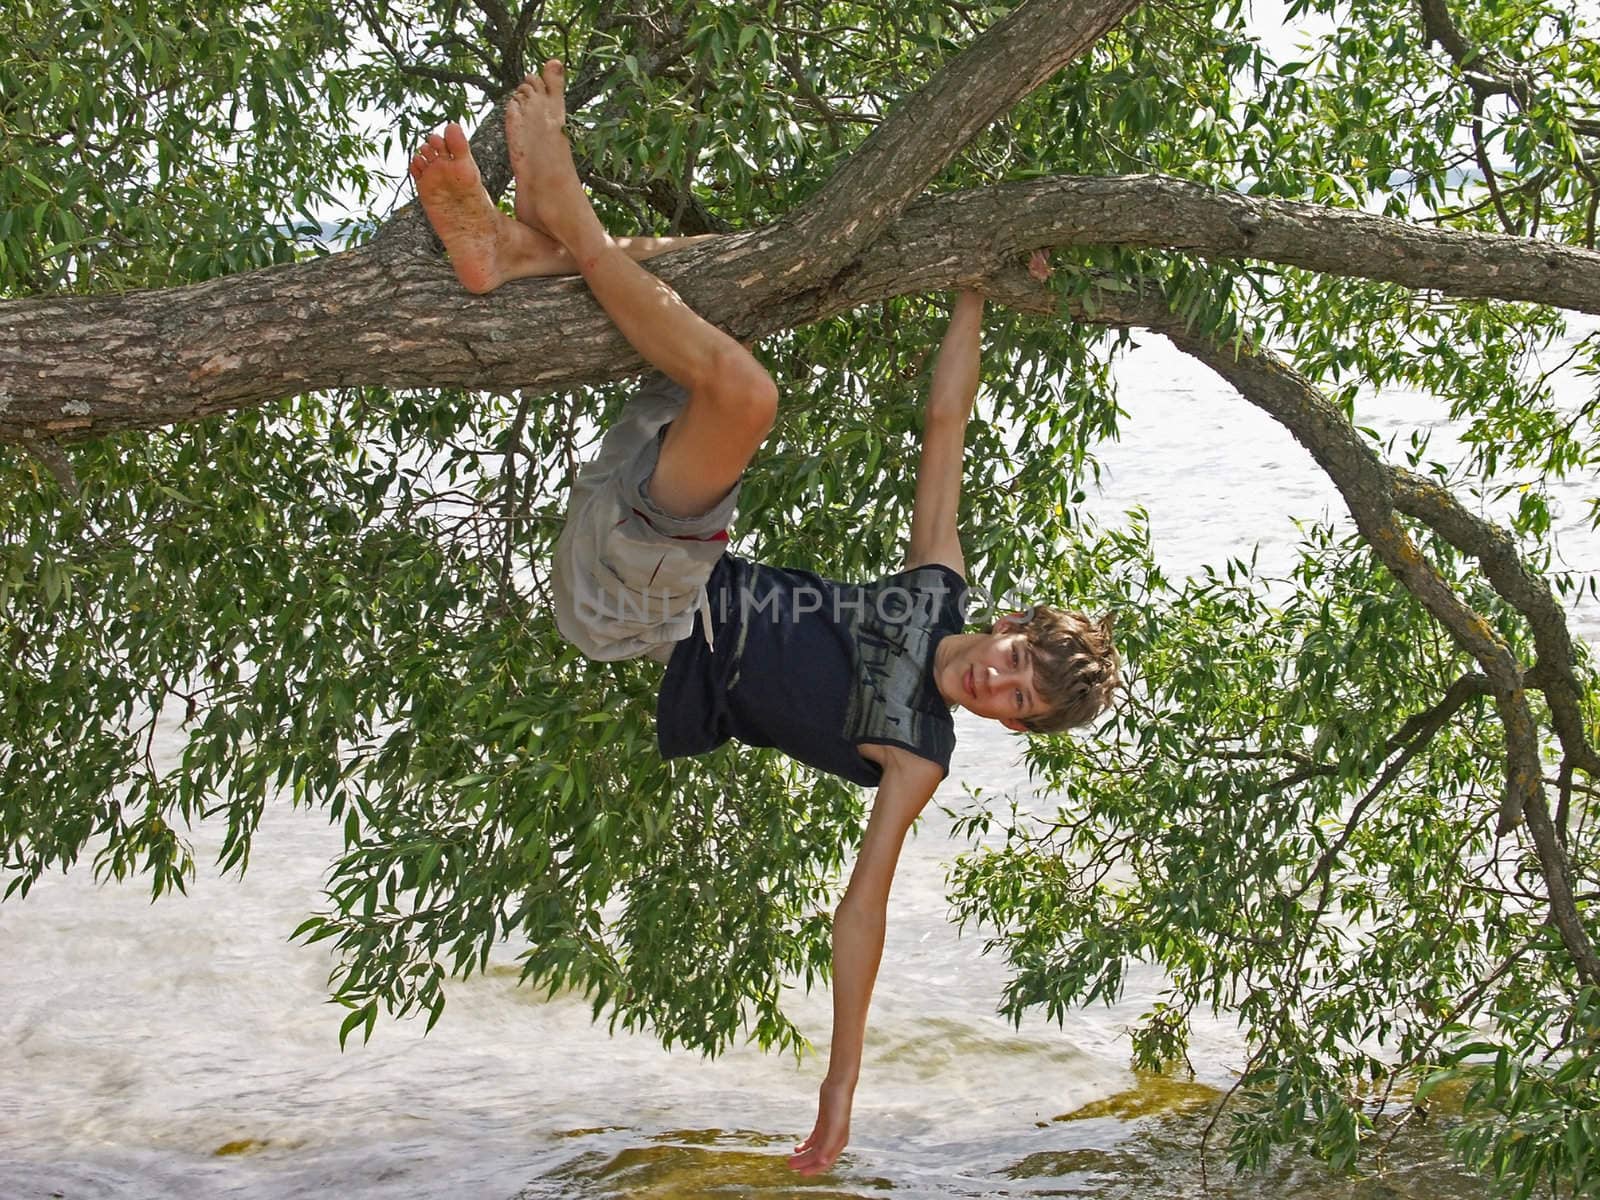 The boy swinging on a tree